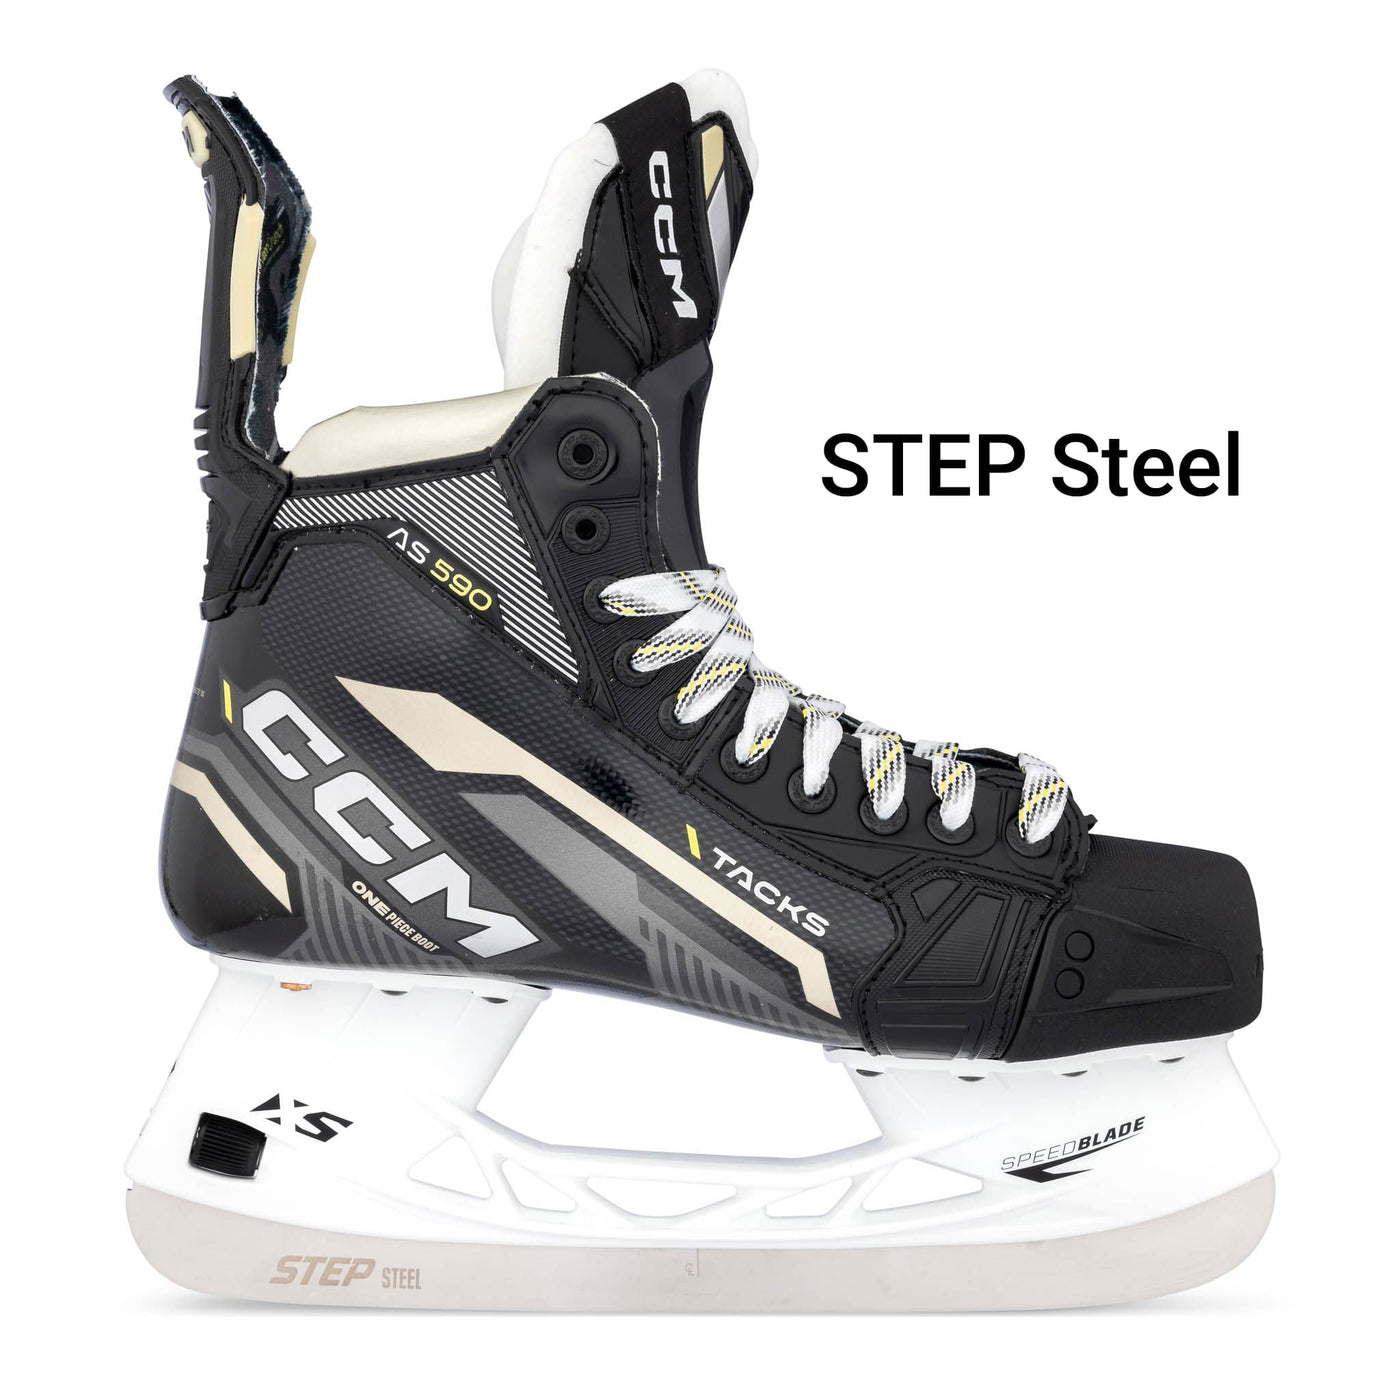 CCM Tacks AS590 Intermediate Hockey Skates - The Hockey Shop Source For Sports